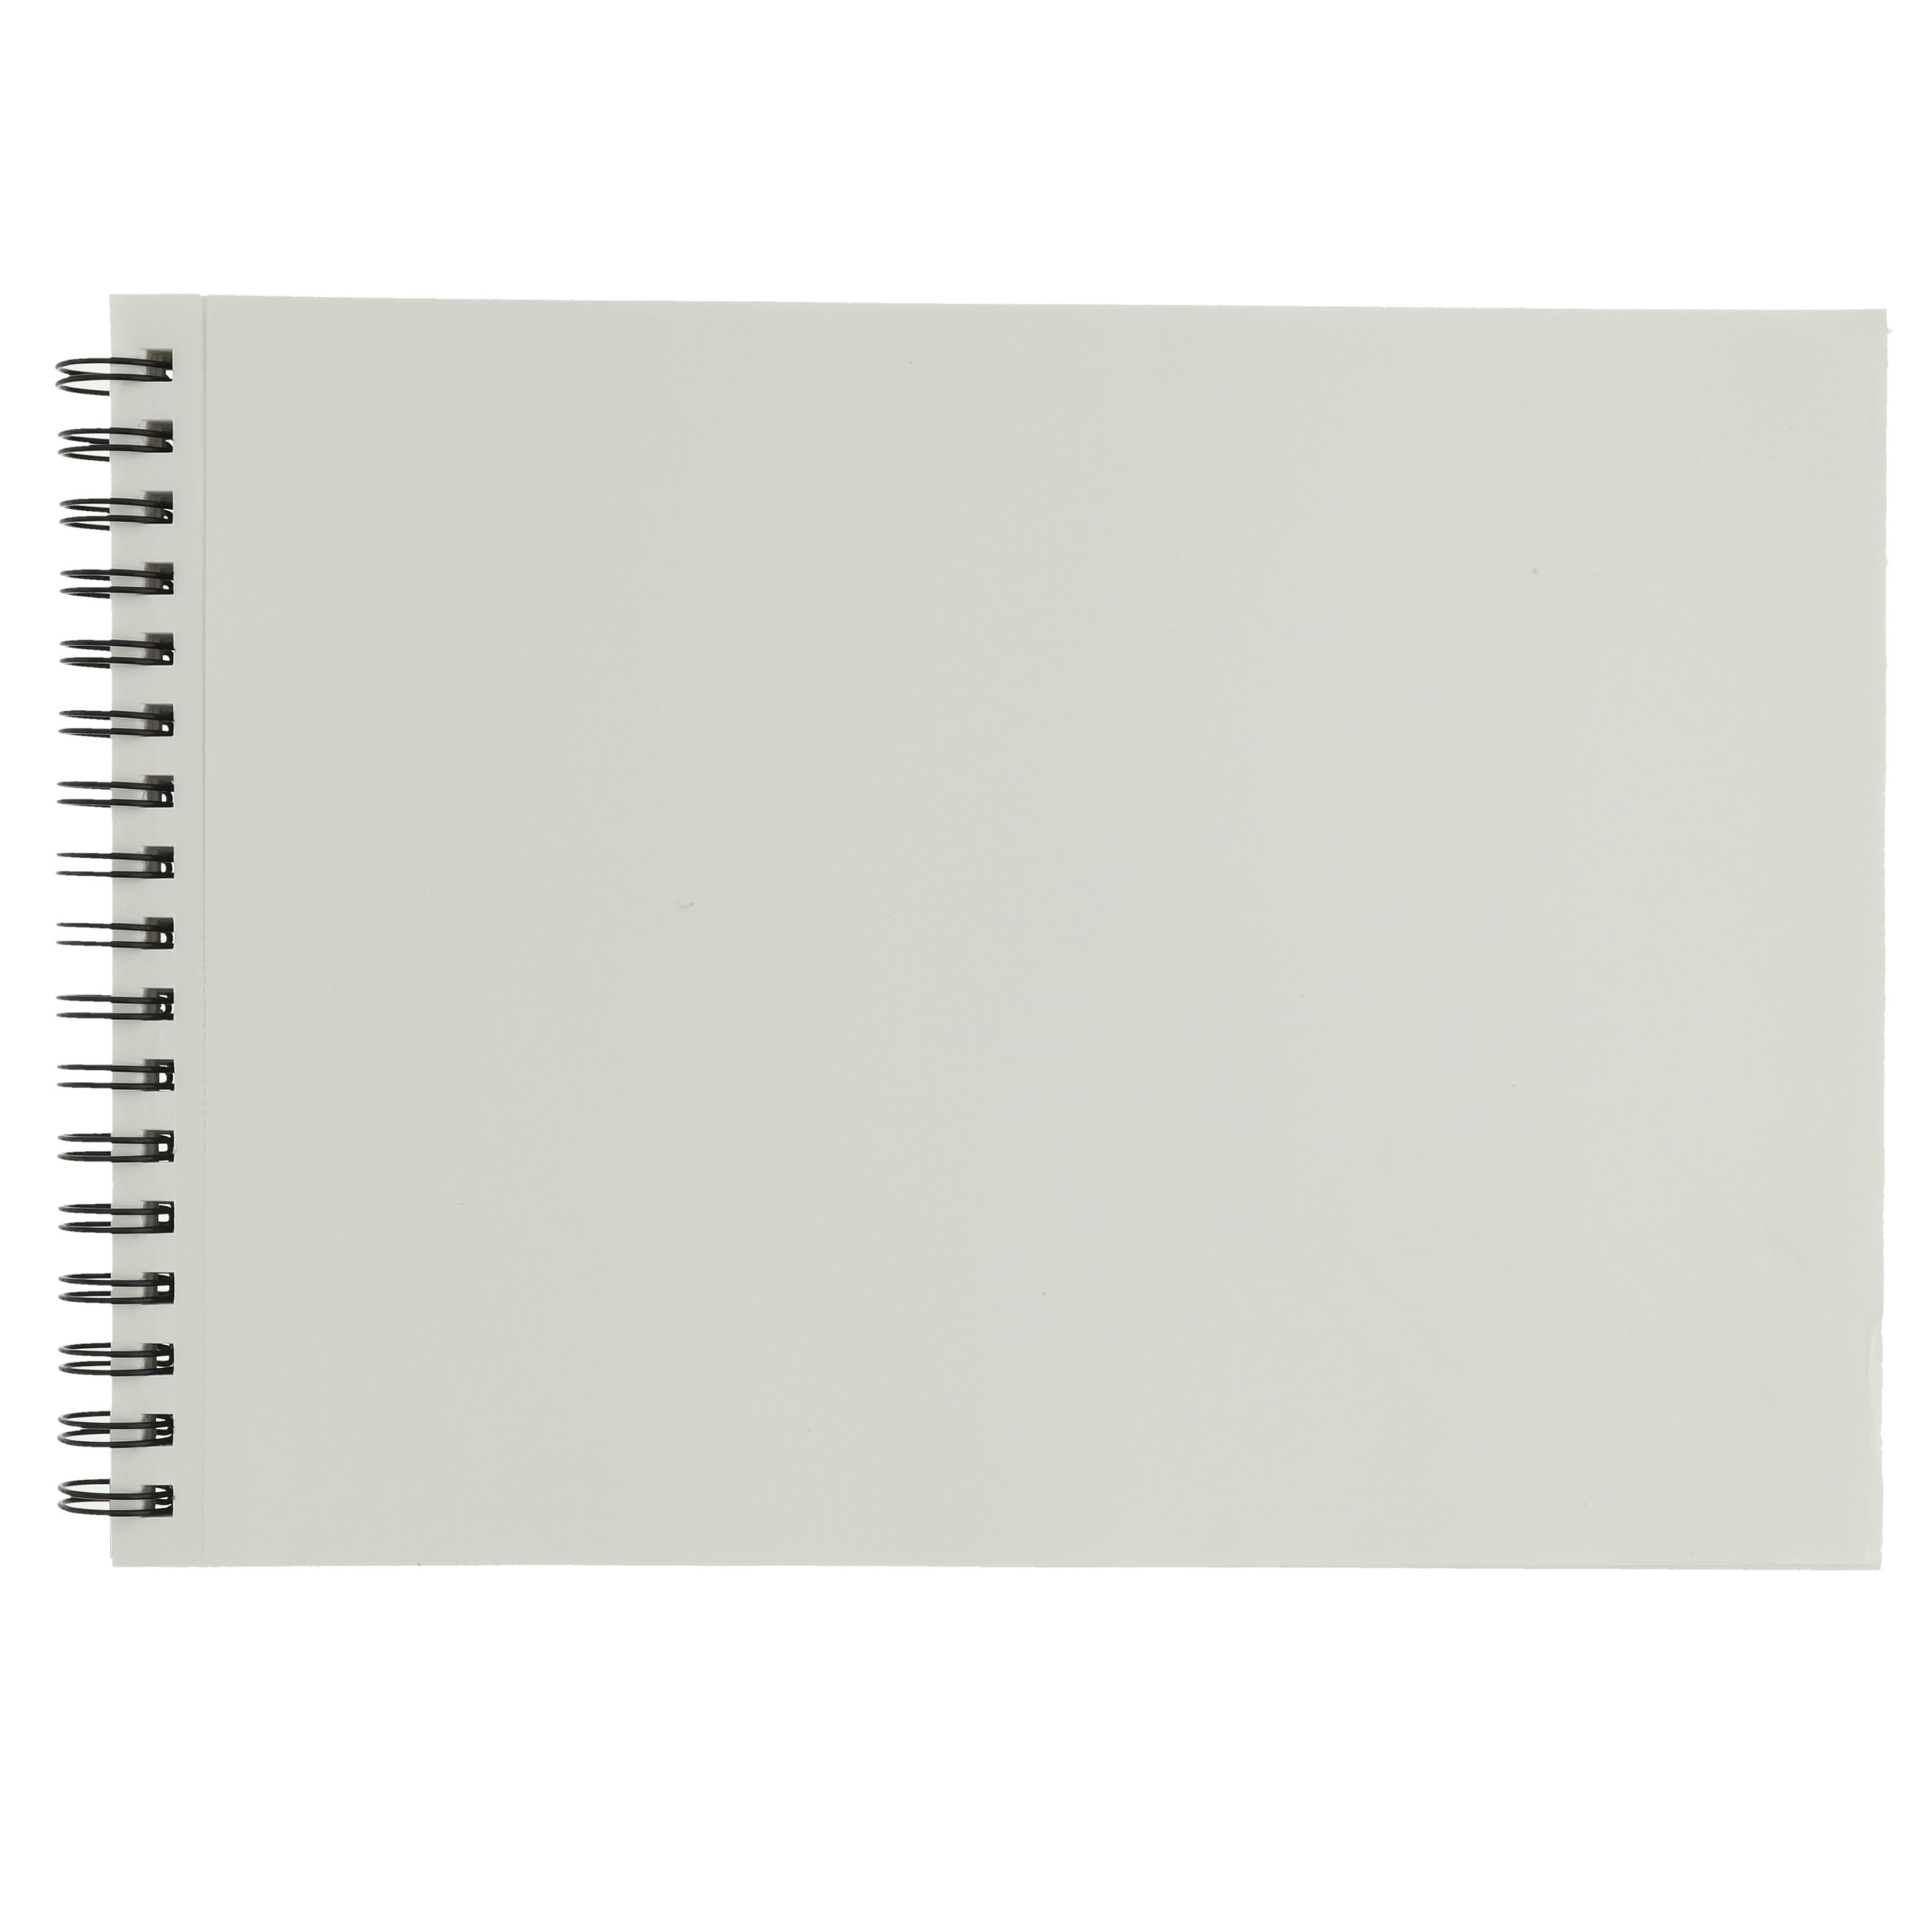 Sketch Pad - #14521 – Faber-Castell USA